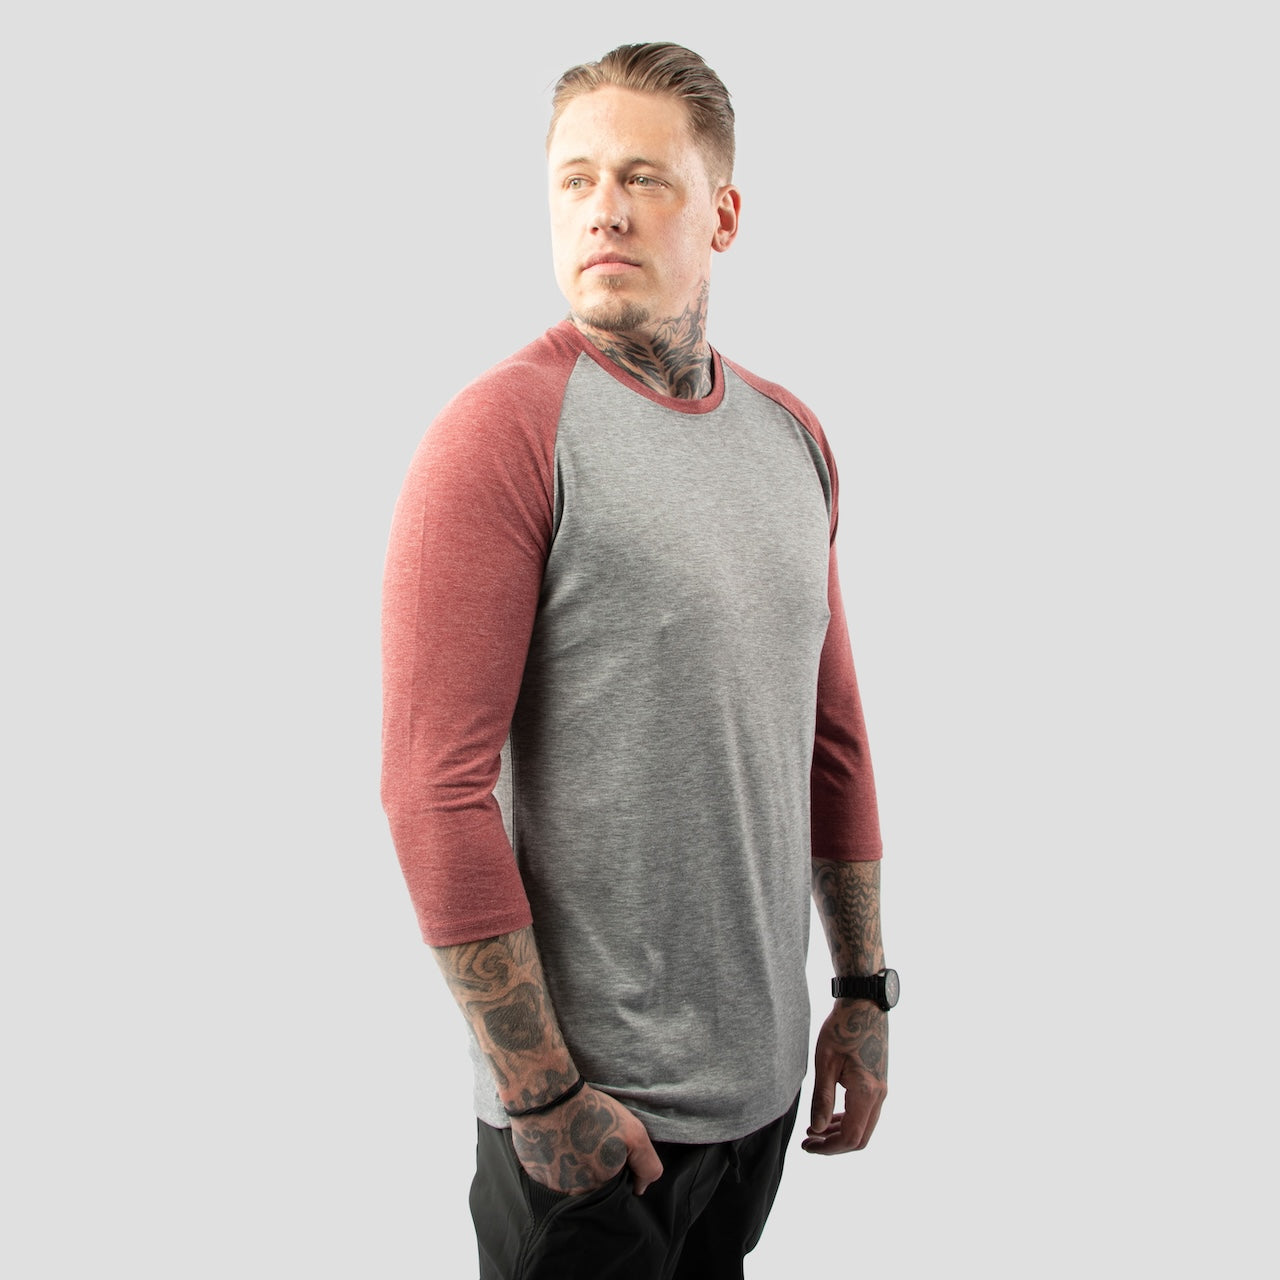 Gray and Red Raglan 3/4 Sleeve Shirt For Tall Slim Men